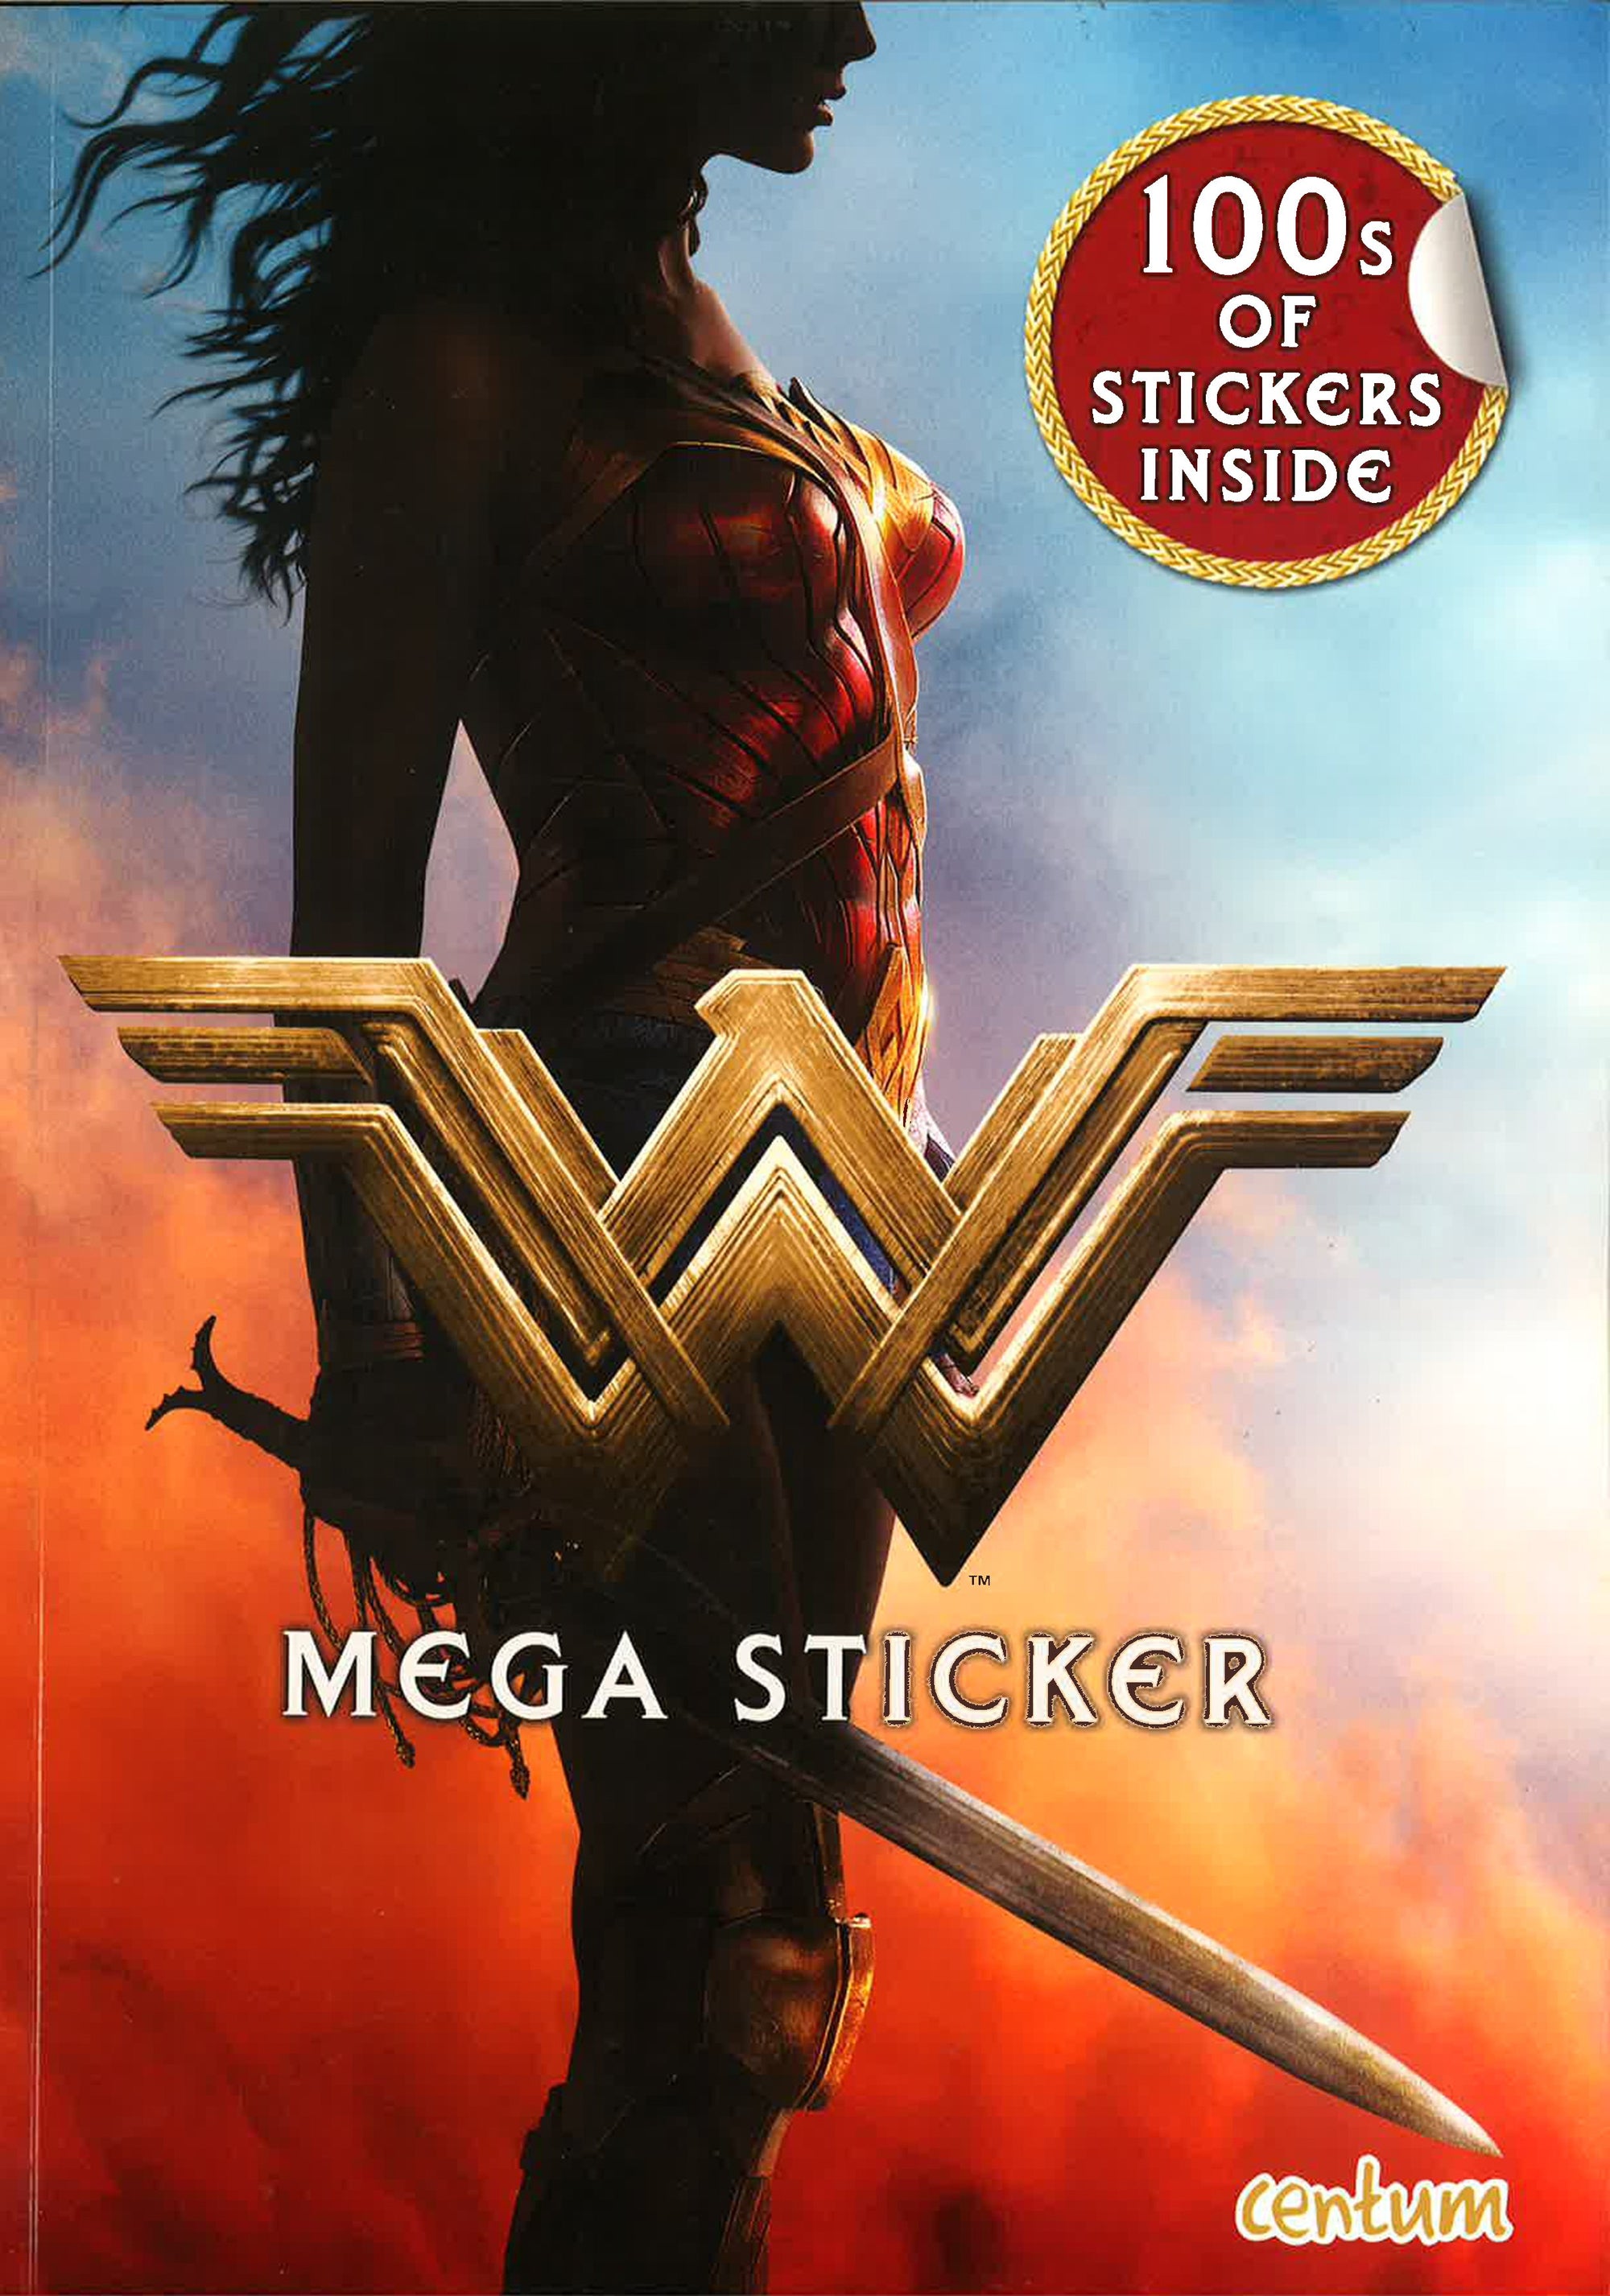 Wonder Woman, DC Extended Universe Wiki